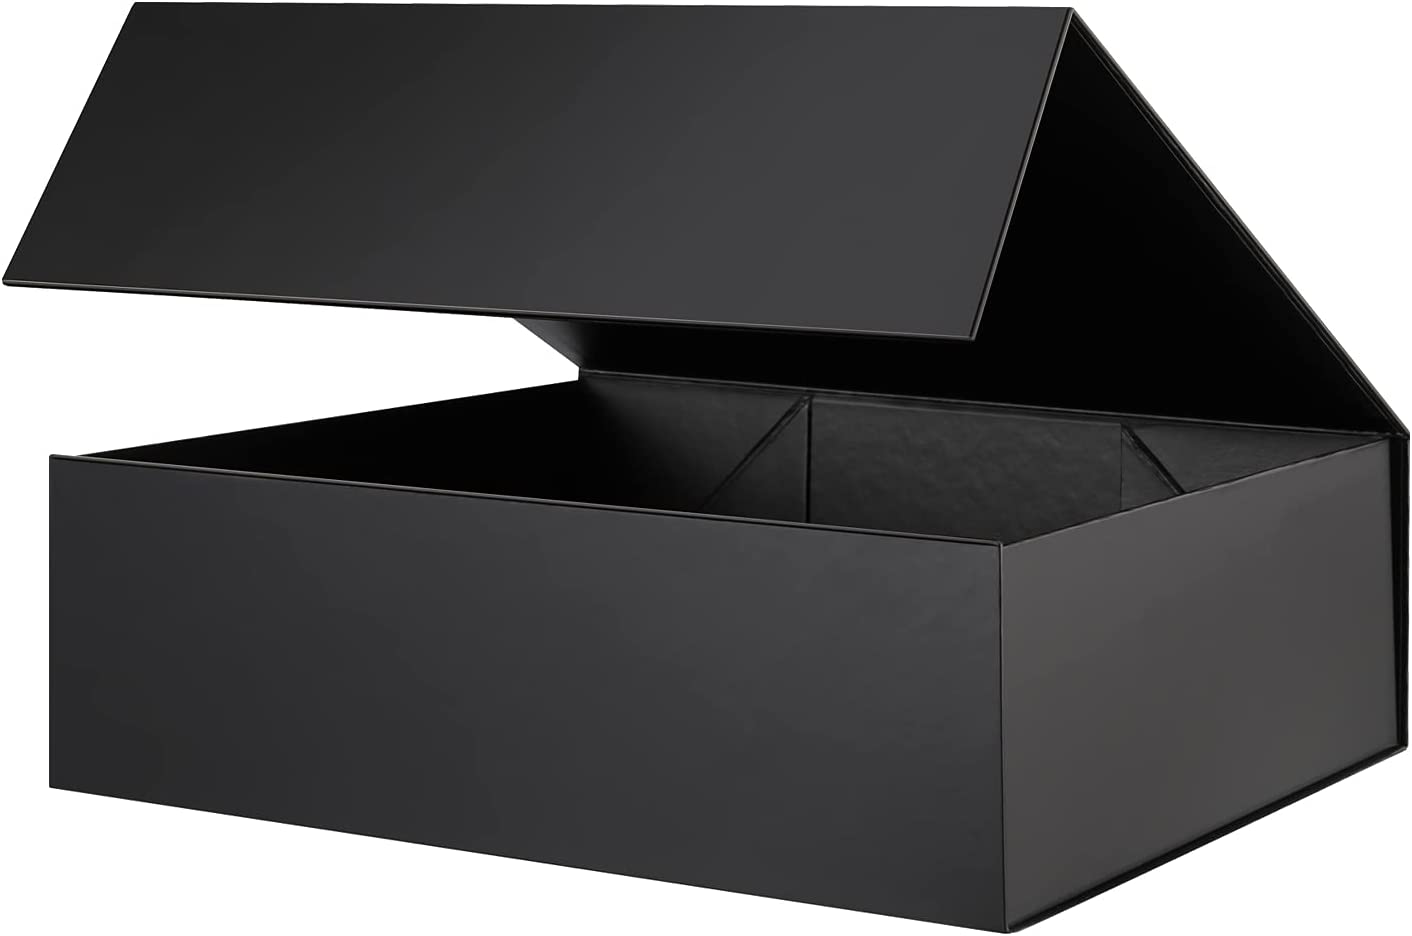  OBMMIRAO Upgrade 1PCS White Hard Extra Large Gift Box